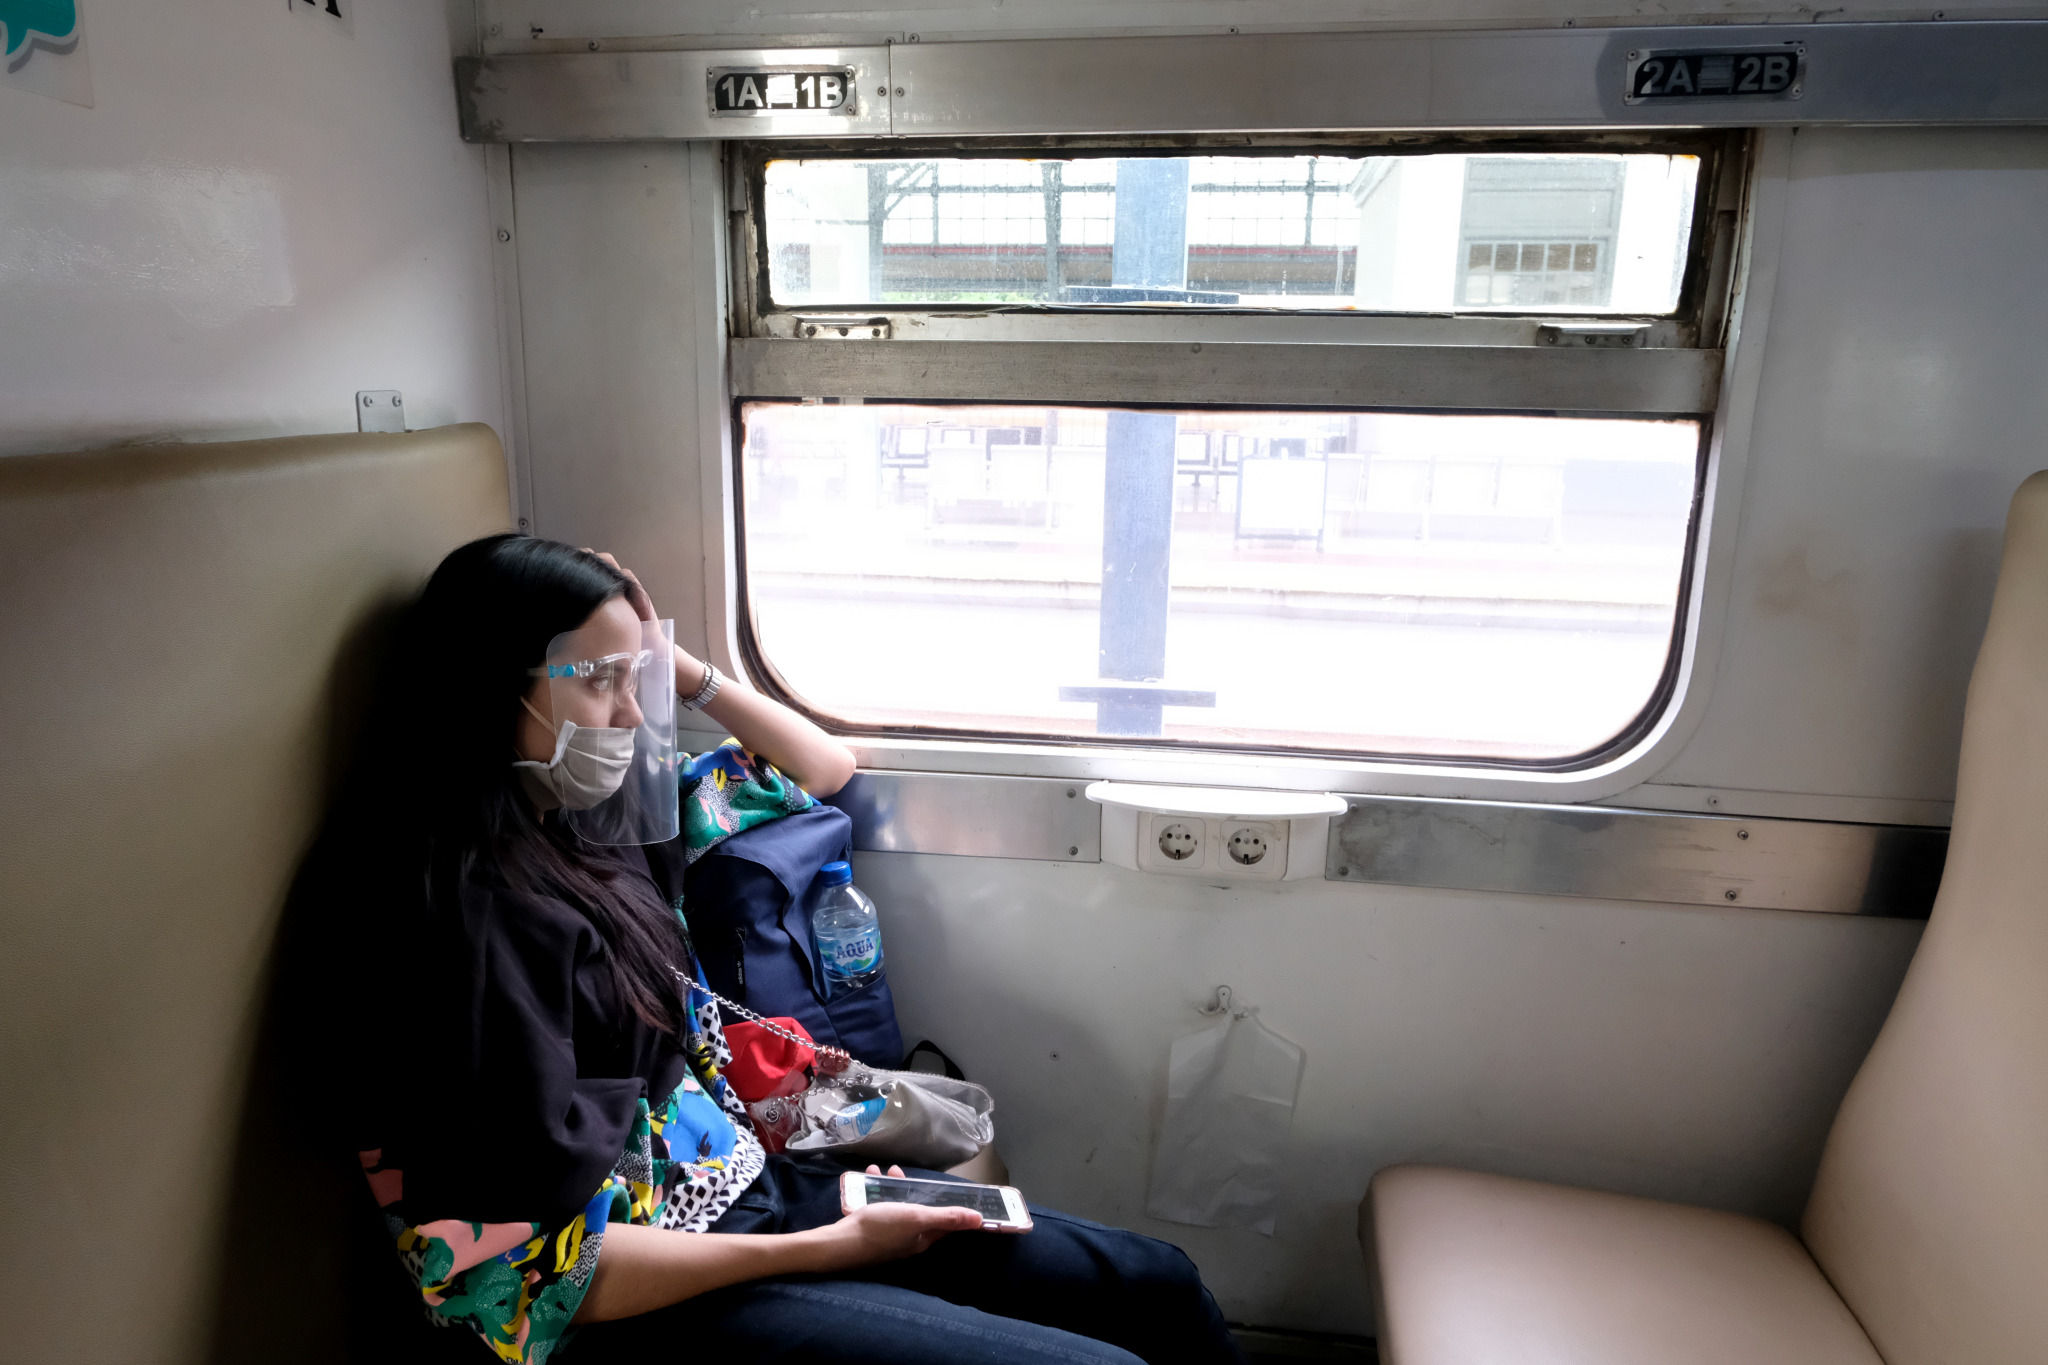 <p>Penumpang berada didalam rangkaian kereta api Matarmaja relasi Jakarta-Malang yang diberangkatkan dari stasiun Pasar Senen, Jakarta, Selasa, 27 Oktober 2020. Foto: Ismail Pohan/TrenAsia</p>
